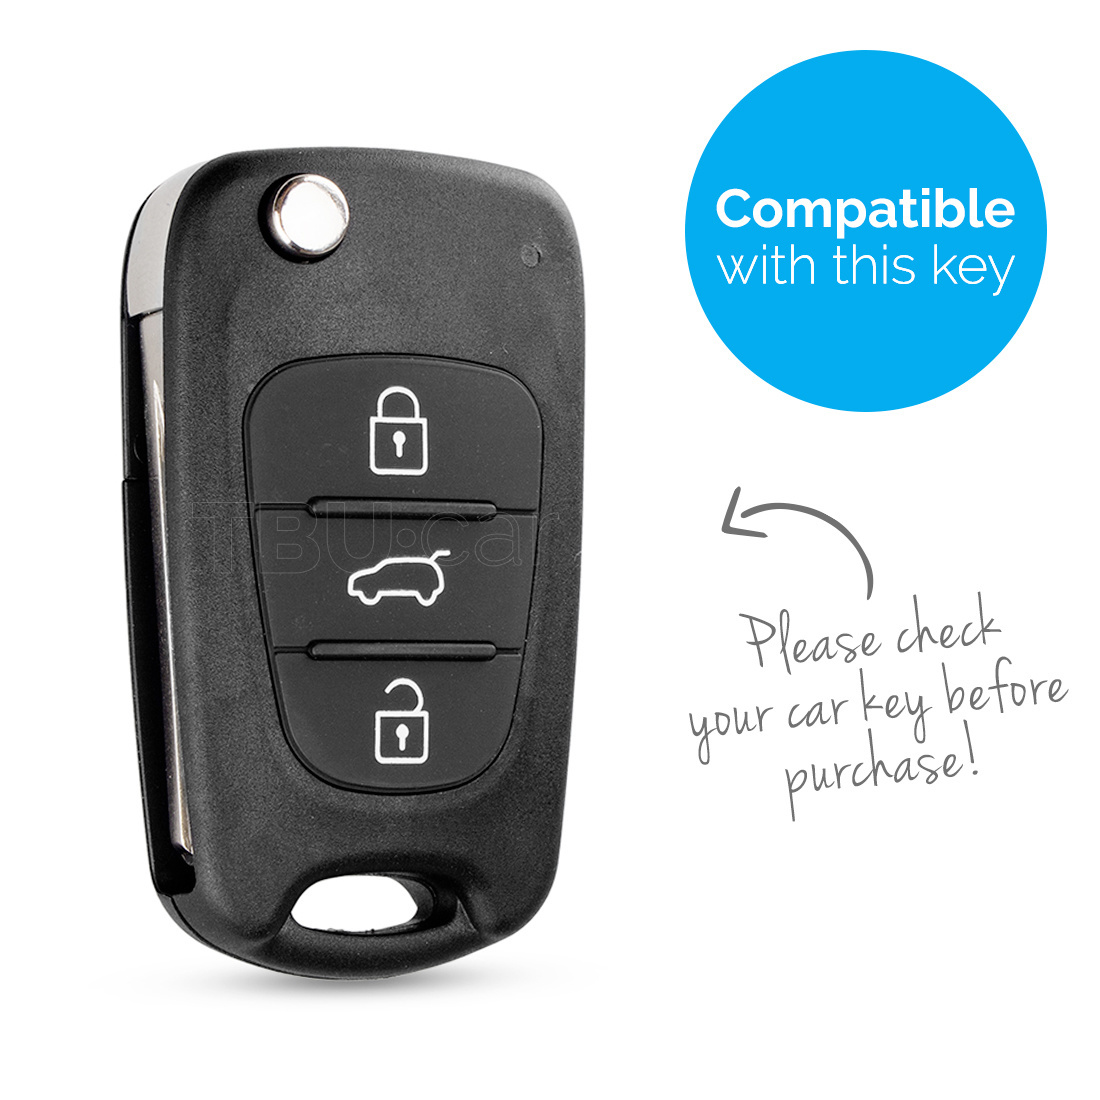 TBU car TBU car Sleutel cover compatibel met Hyundai - TPU sleutel hoesje / beschermhoesje autosleutel - Goud